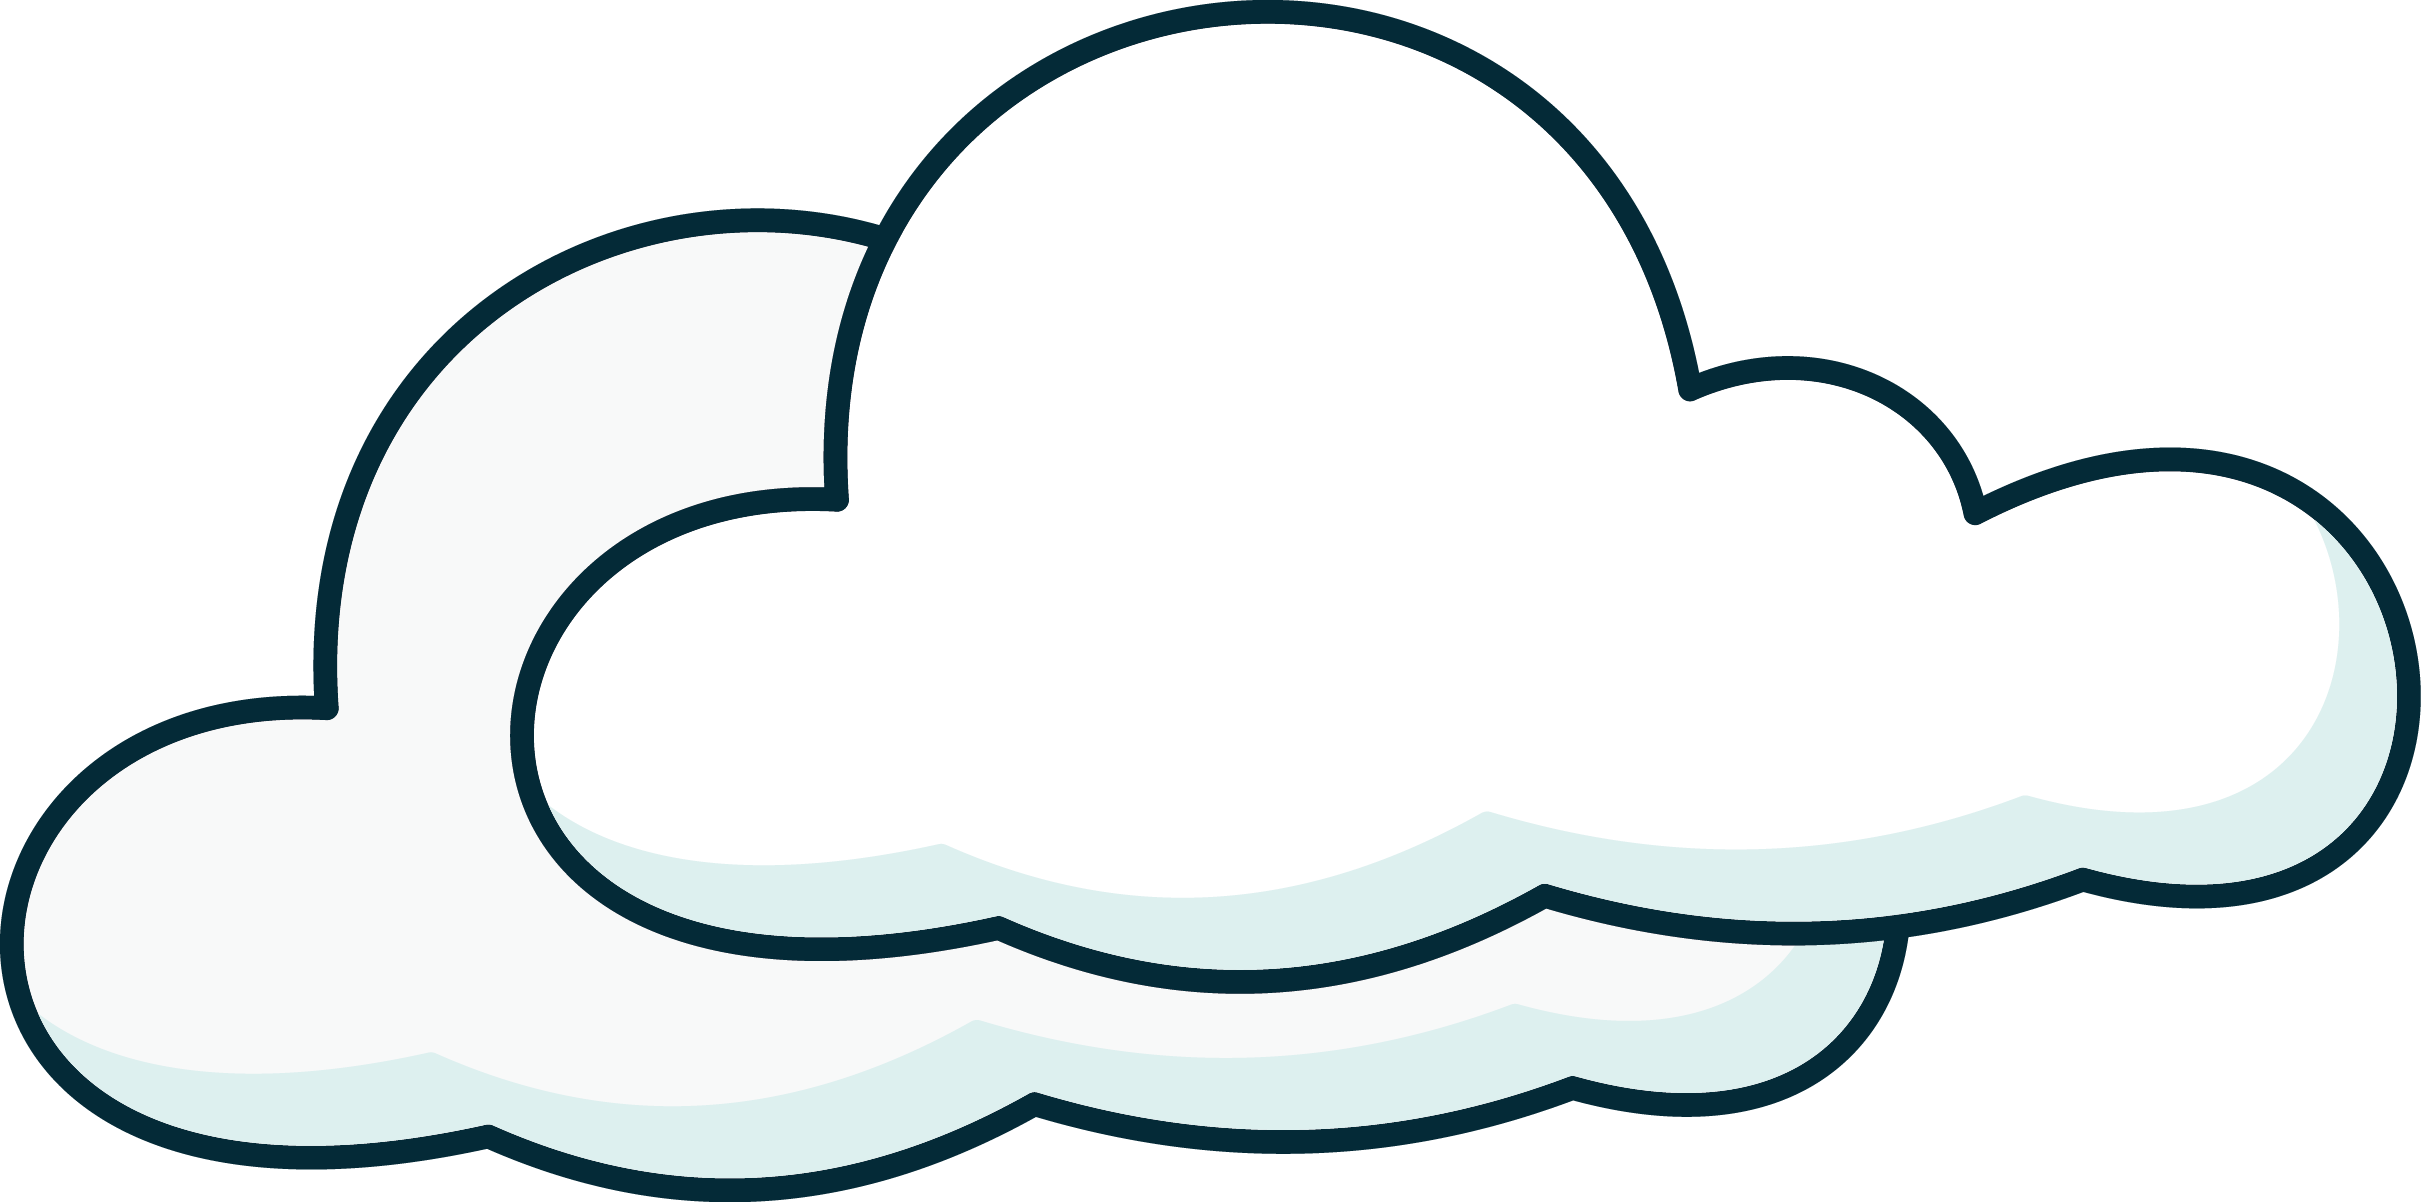 Cloud Cartoon Clip Art - Find high quality cloud clipart, all png ...